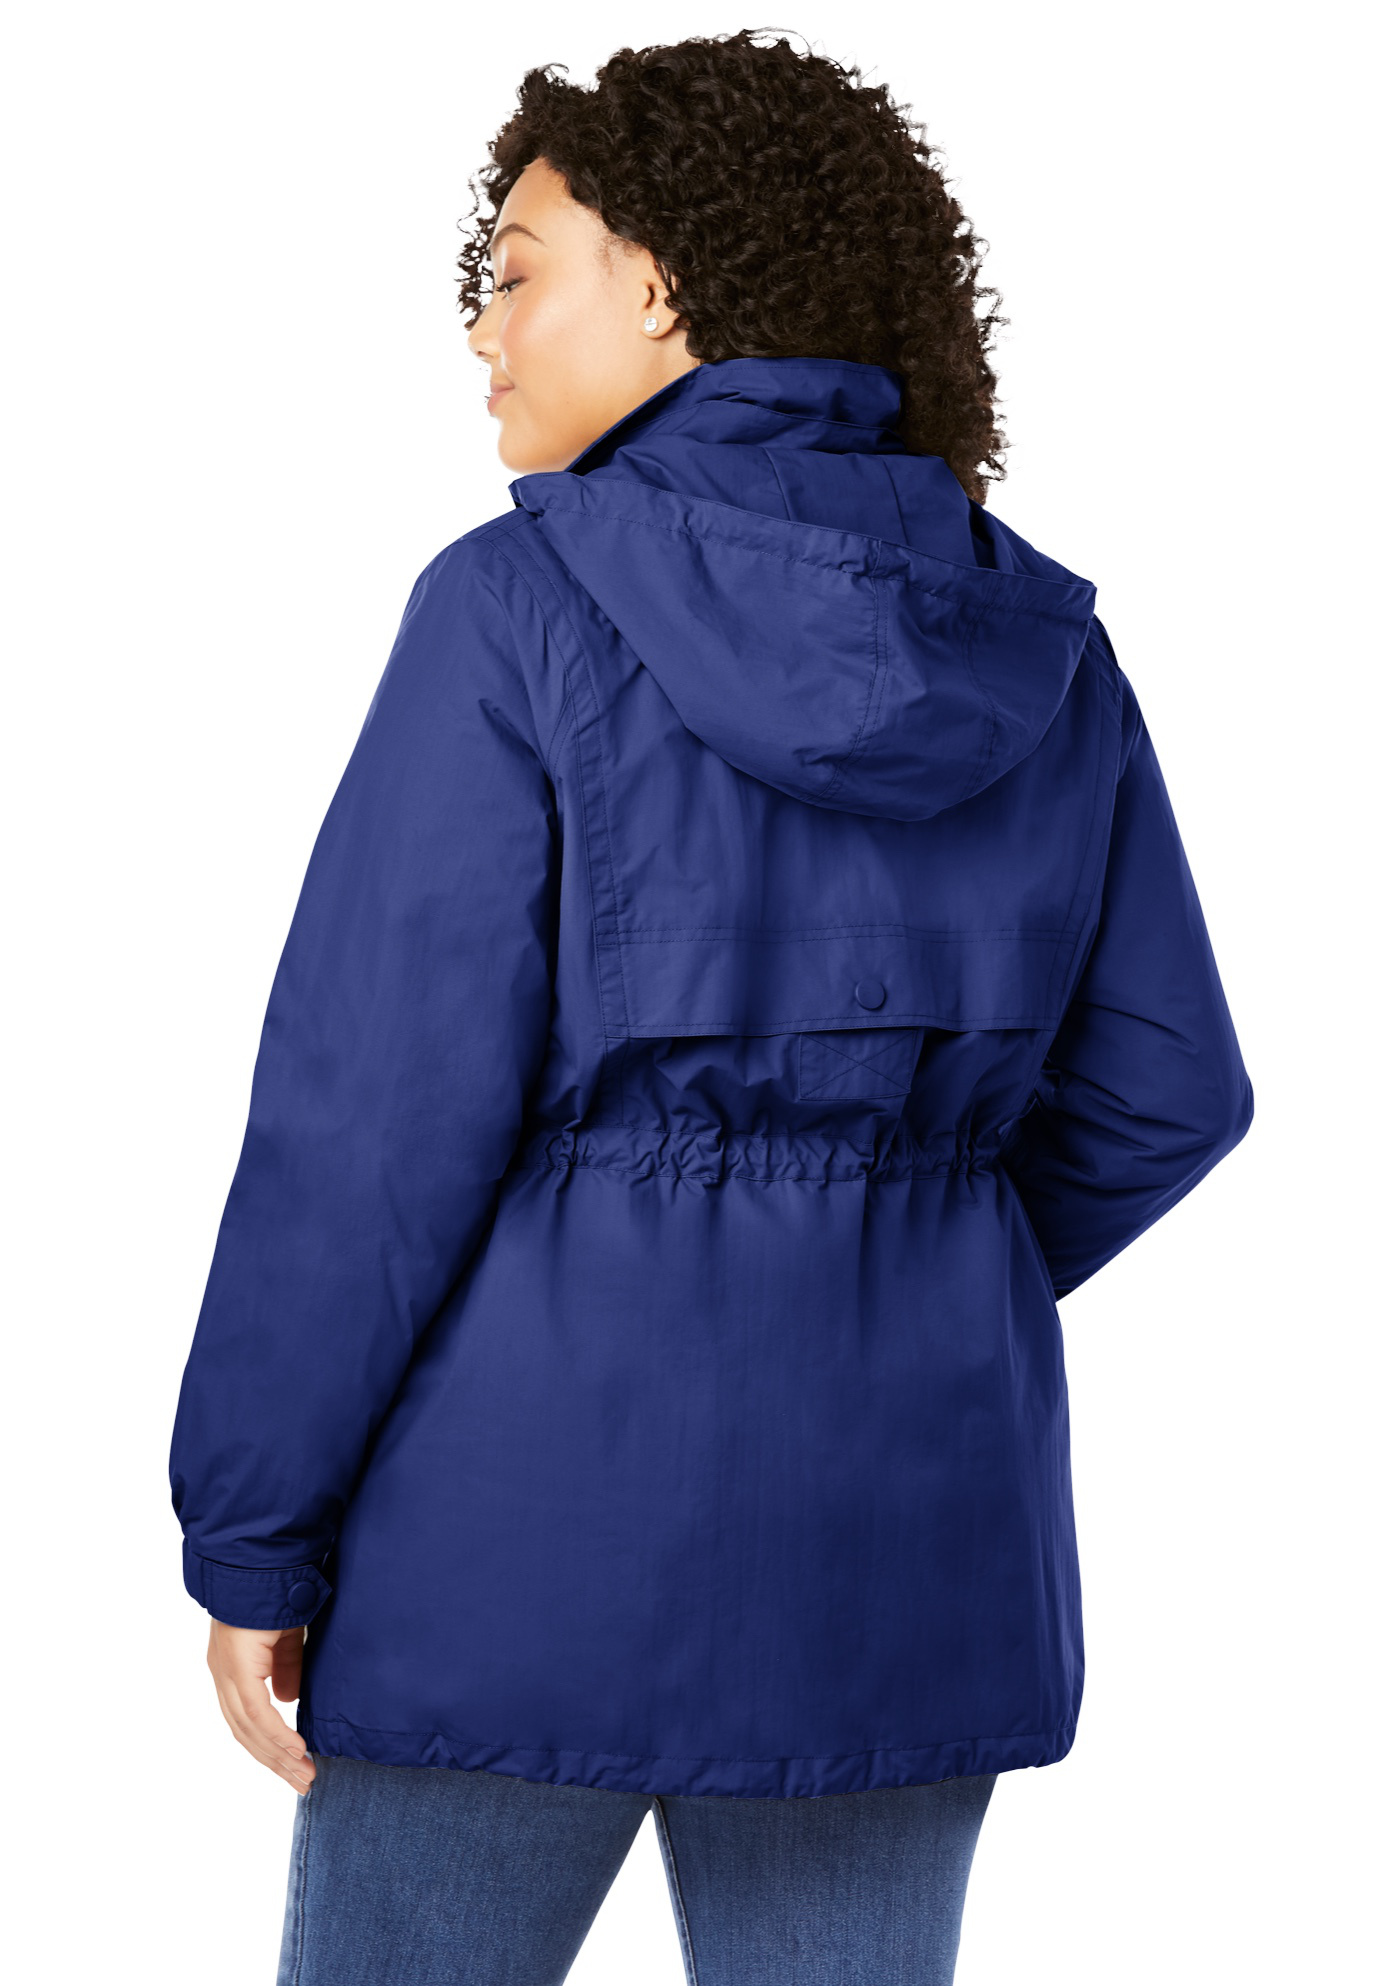 Woman Within Women's Plus Size Fleece-Lined Taslon Anorak Rain Jacket - image 3 of 6